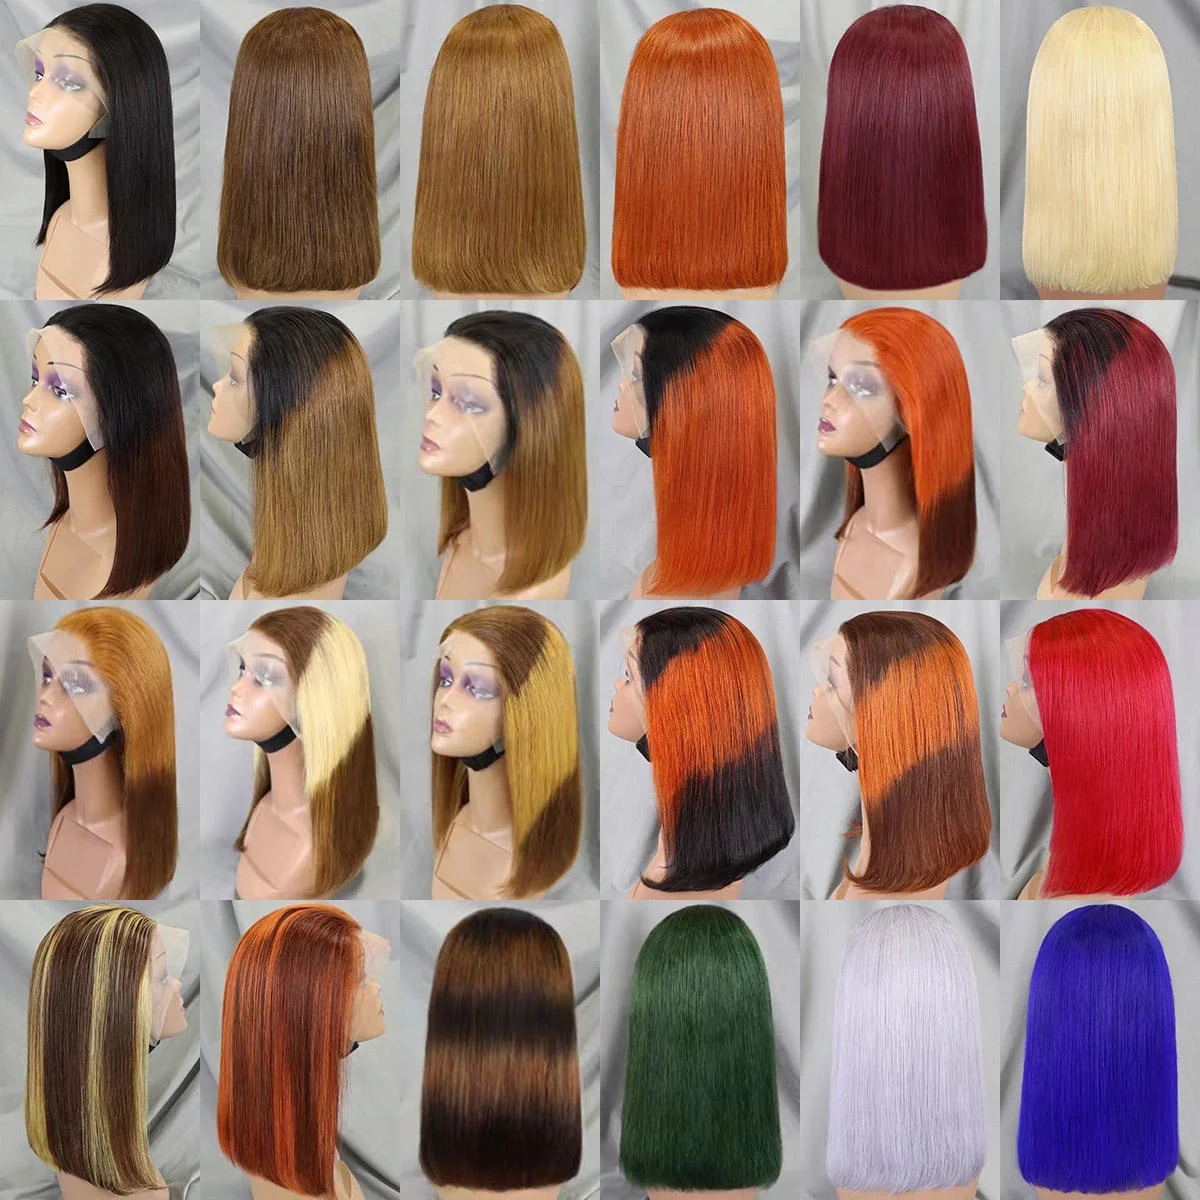 

Letsfly 10-16inch Straight Short Bob Wigs Virgin Brazilian Human Hair 200% density Lace Front Wigs 13X4 Lace Frontal Bob Wigs